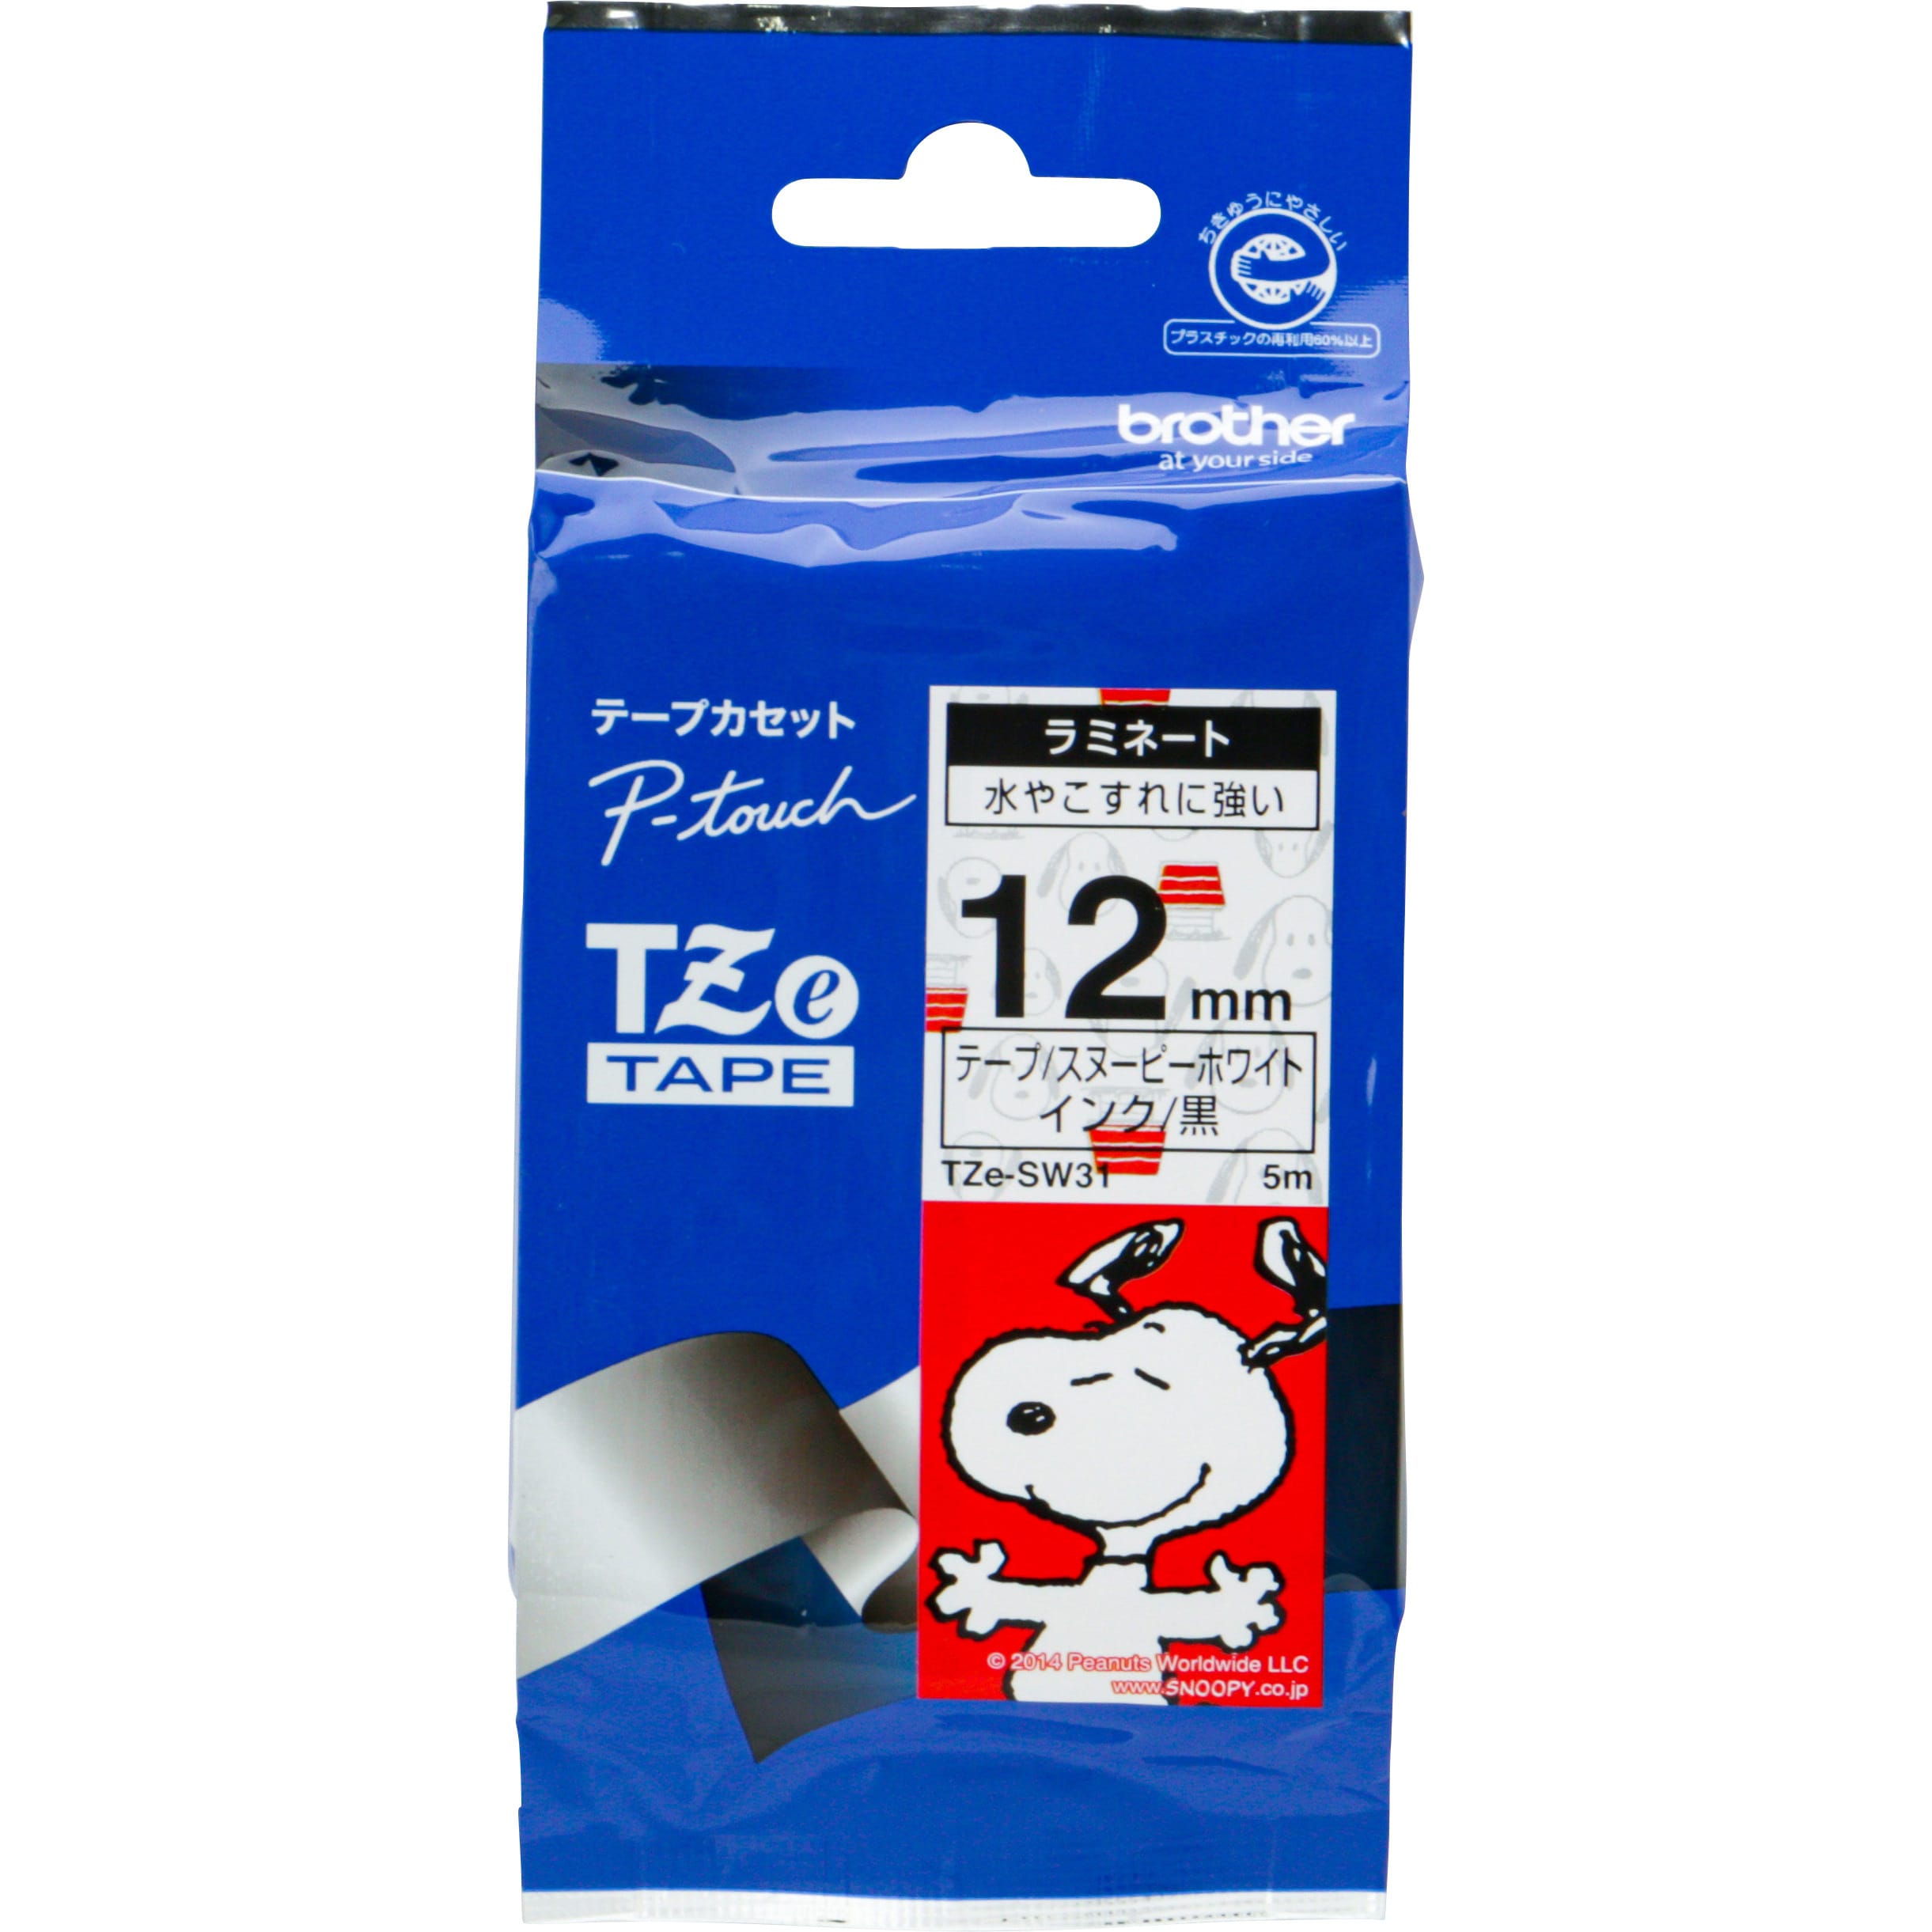 TZe-SW31 ピータッチ ラミネートテープ スヌーピーキャラクター 1巻